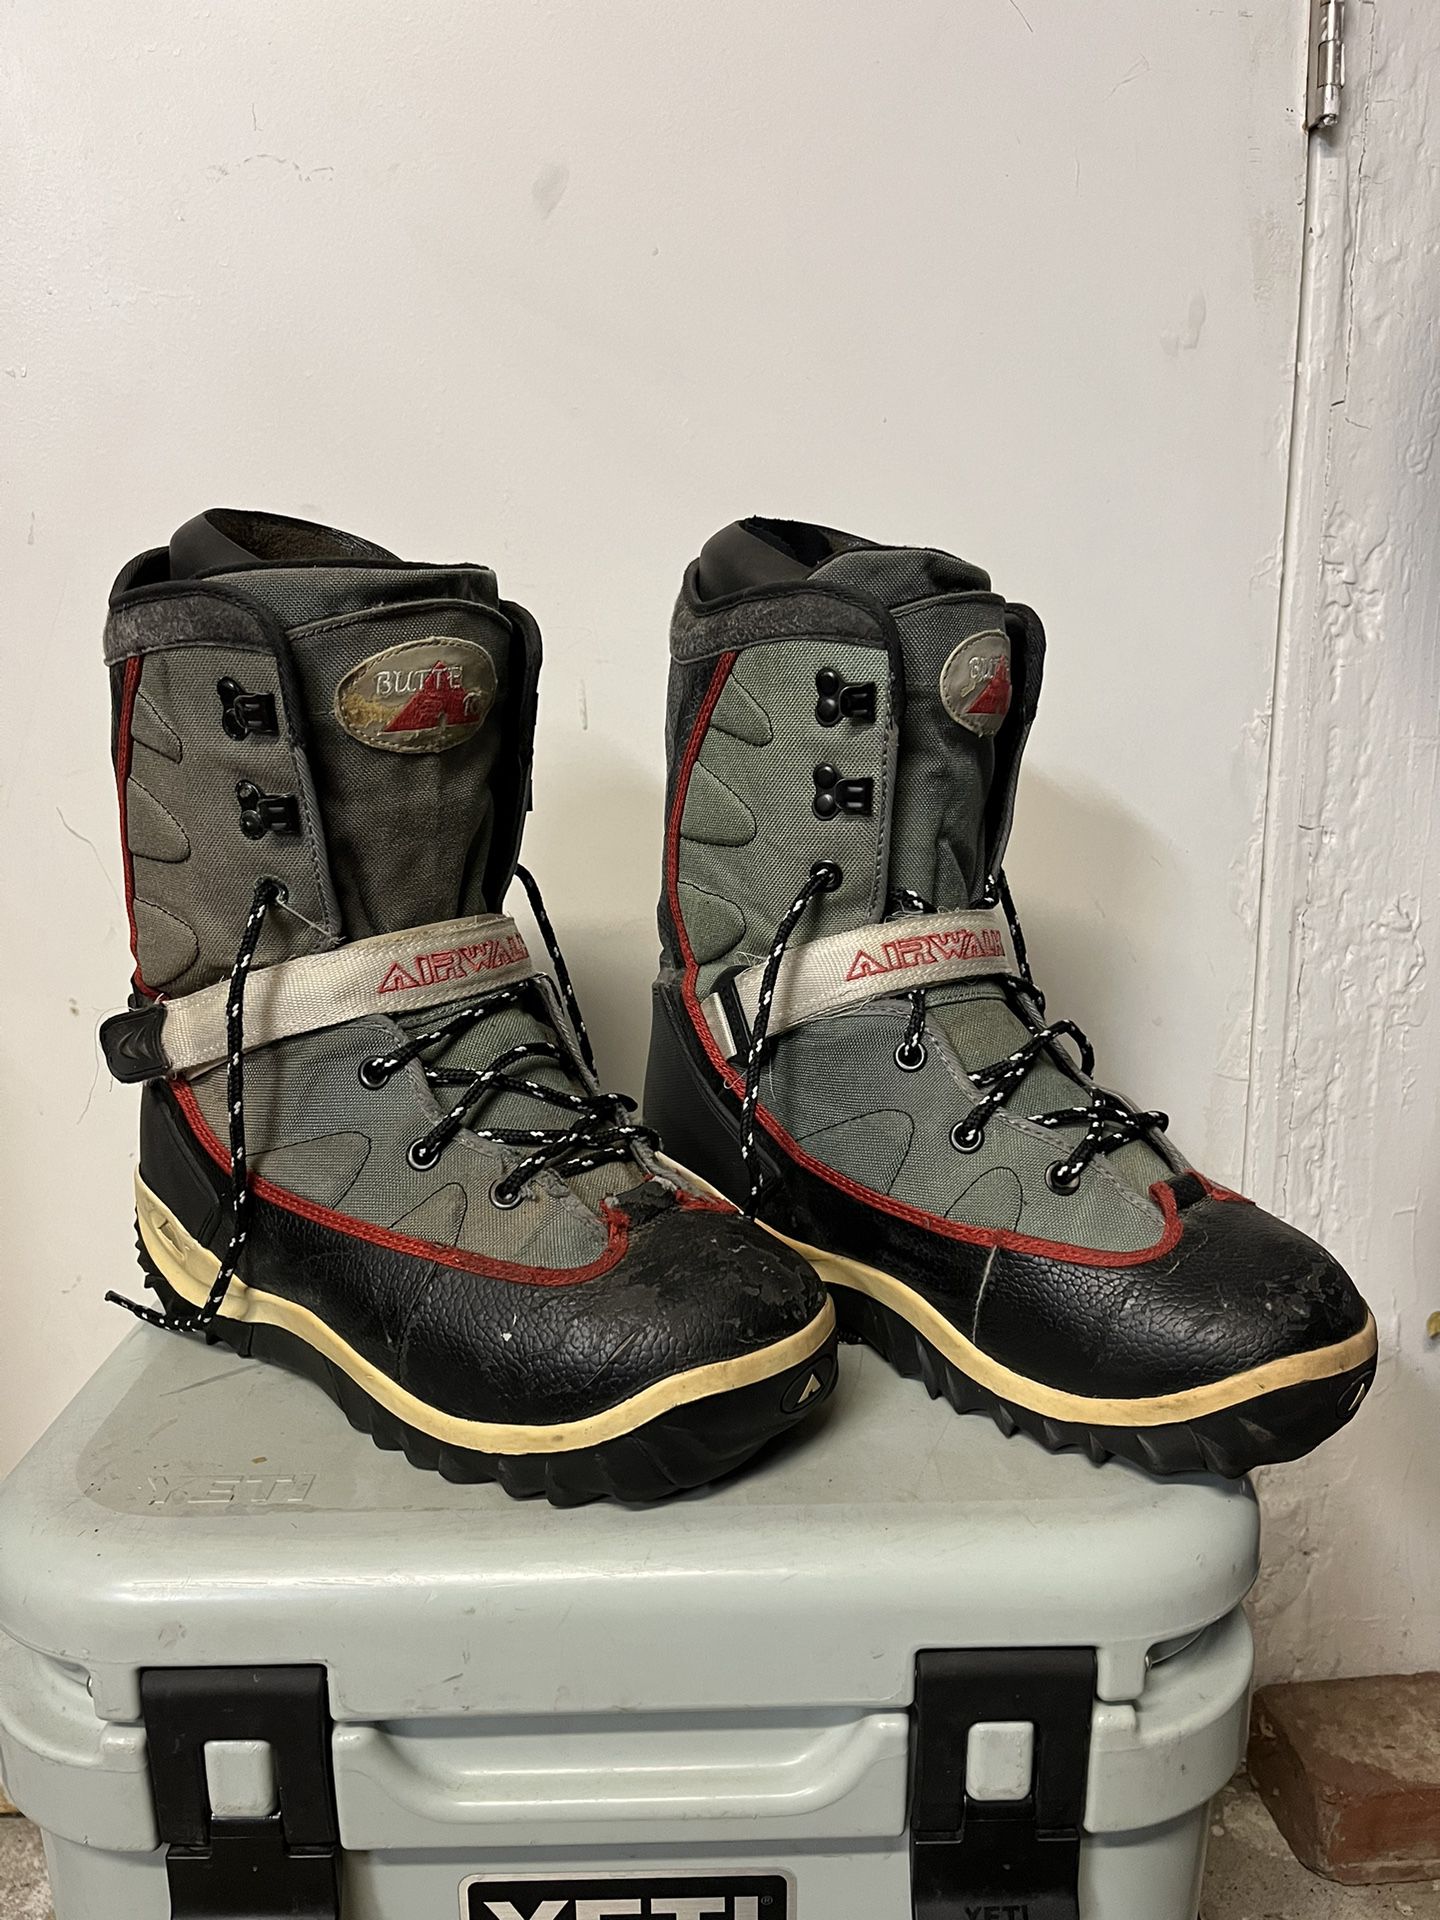 Men’s Snowboarding Boots / Airwalk Size 11